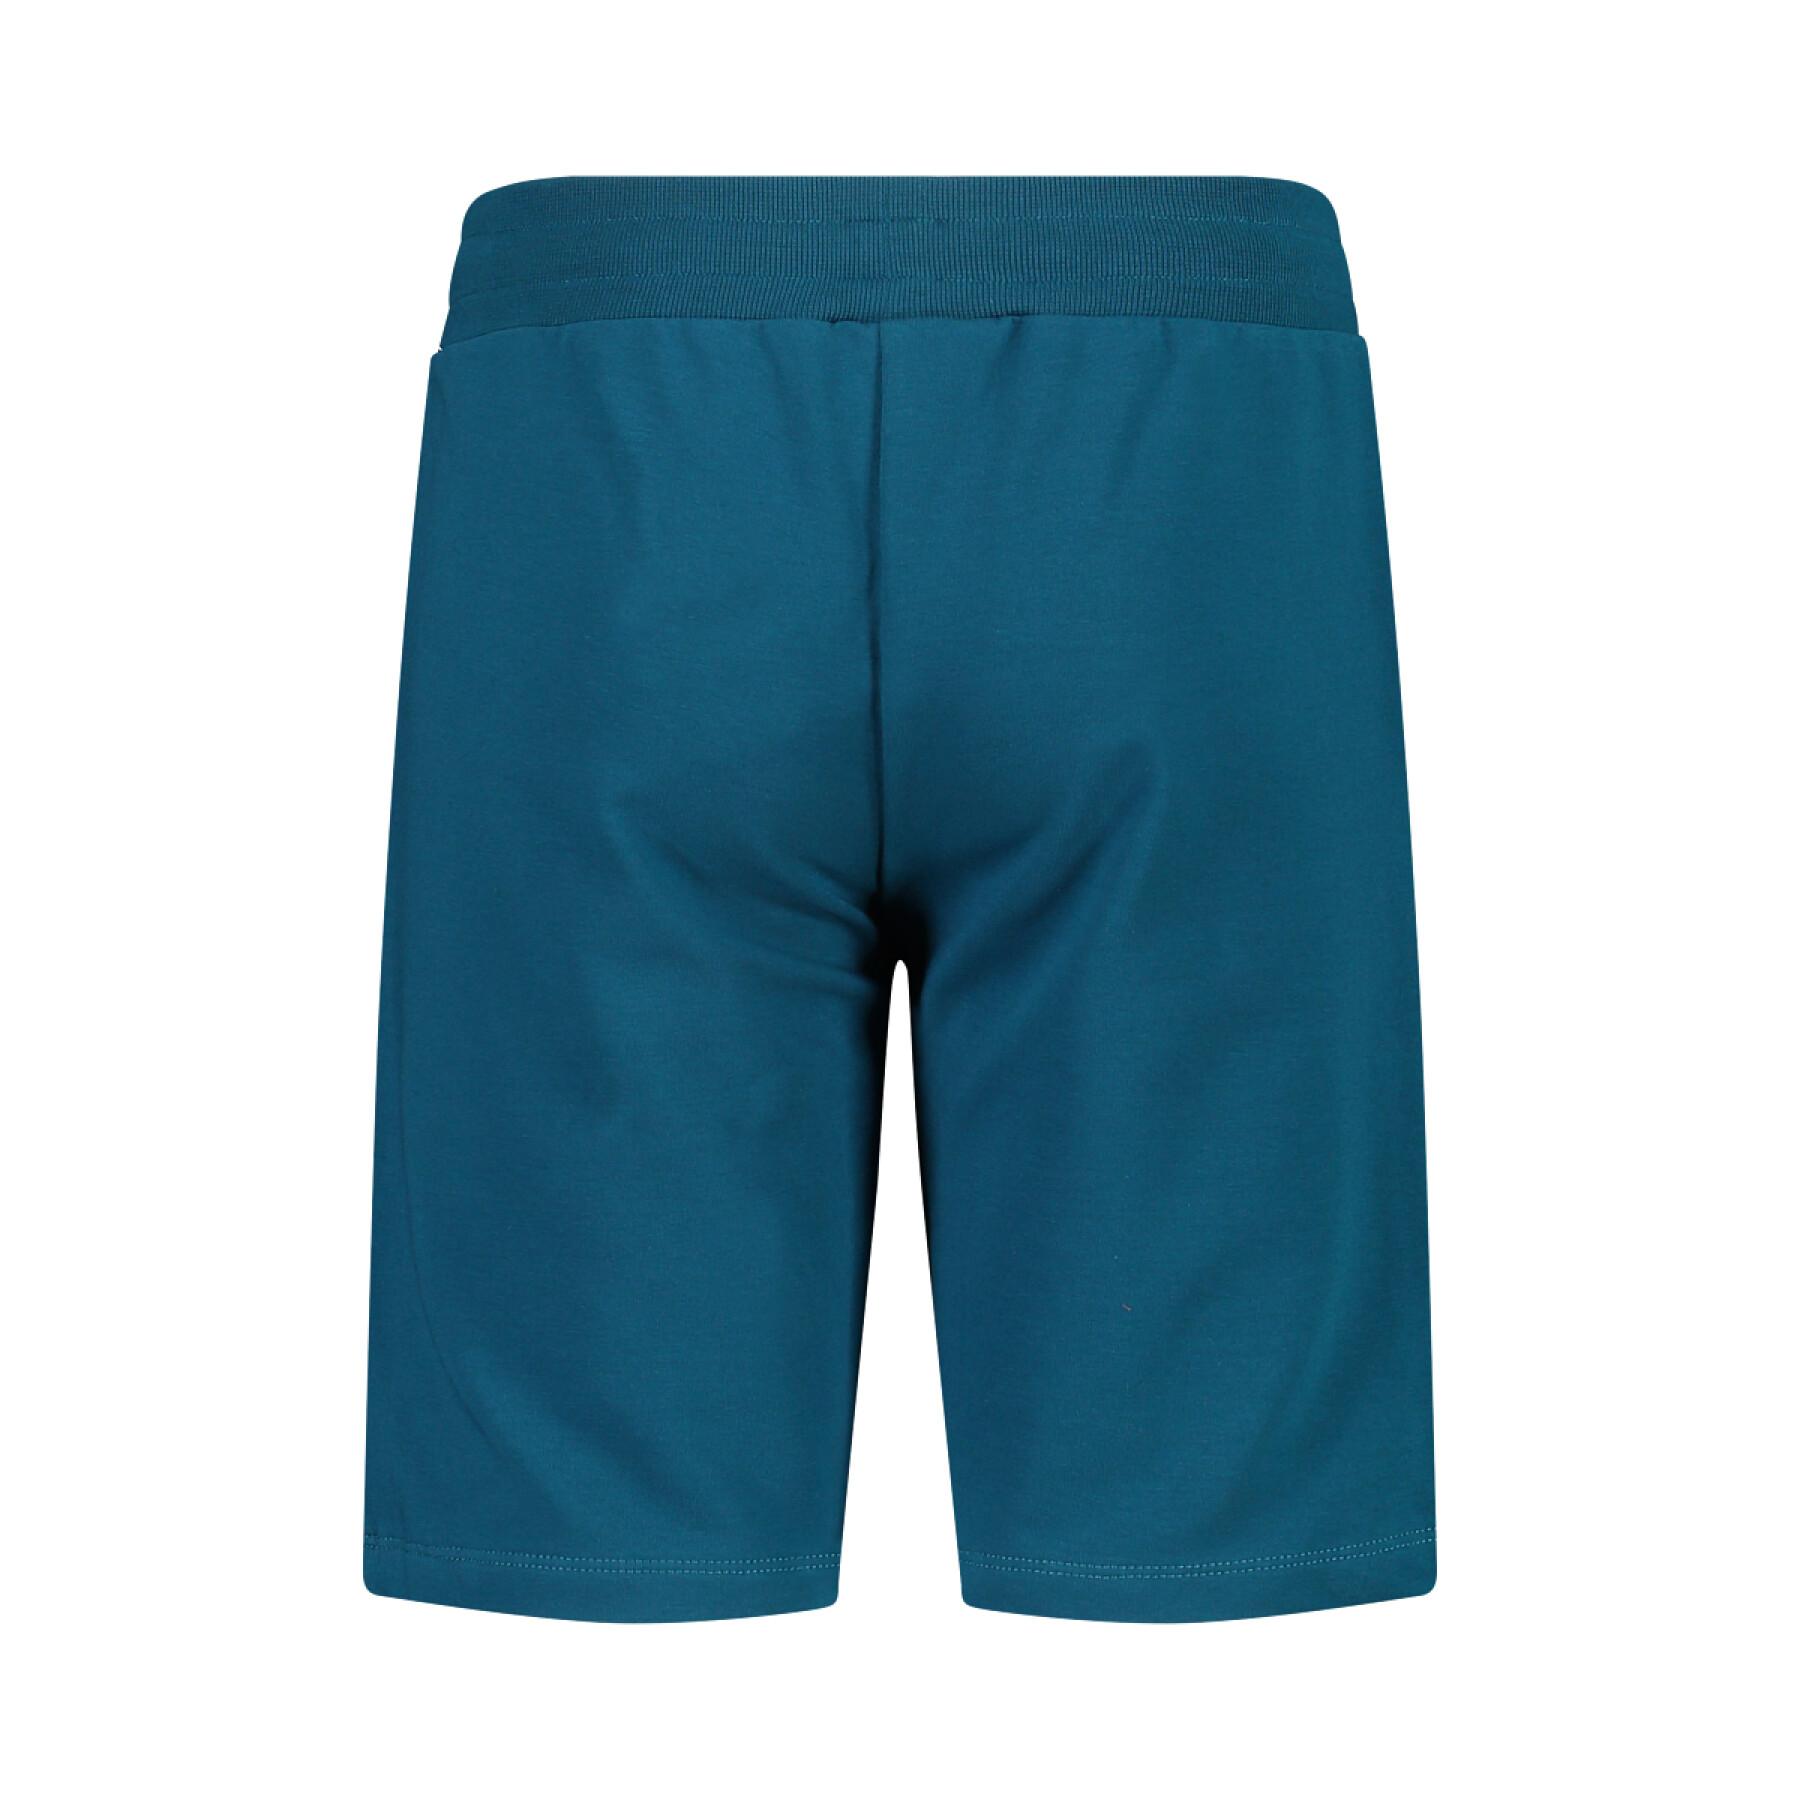 Bermuda shorts for children CMP